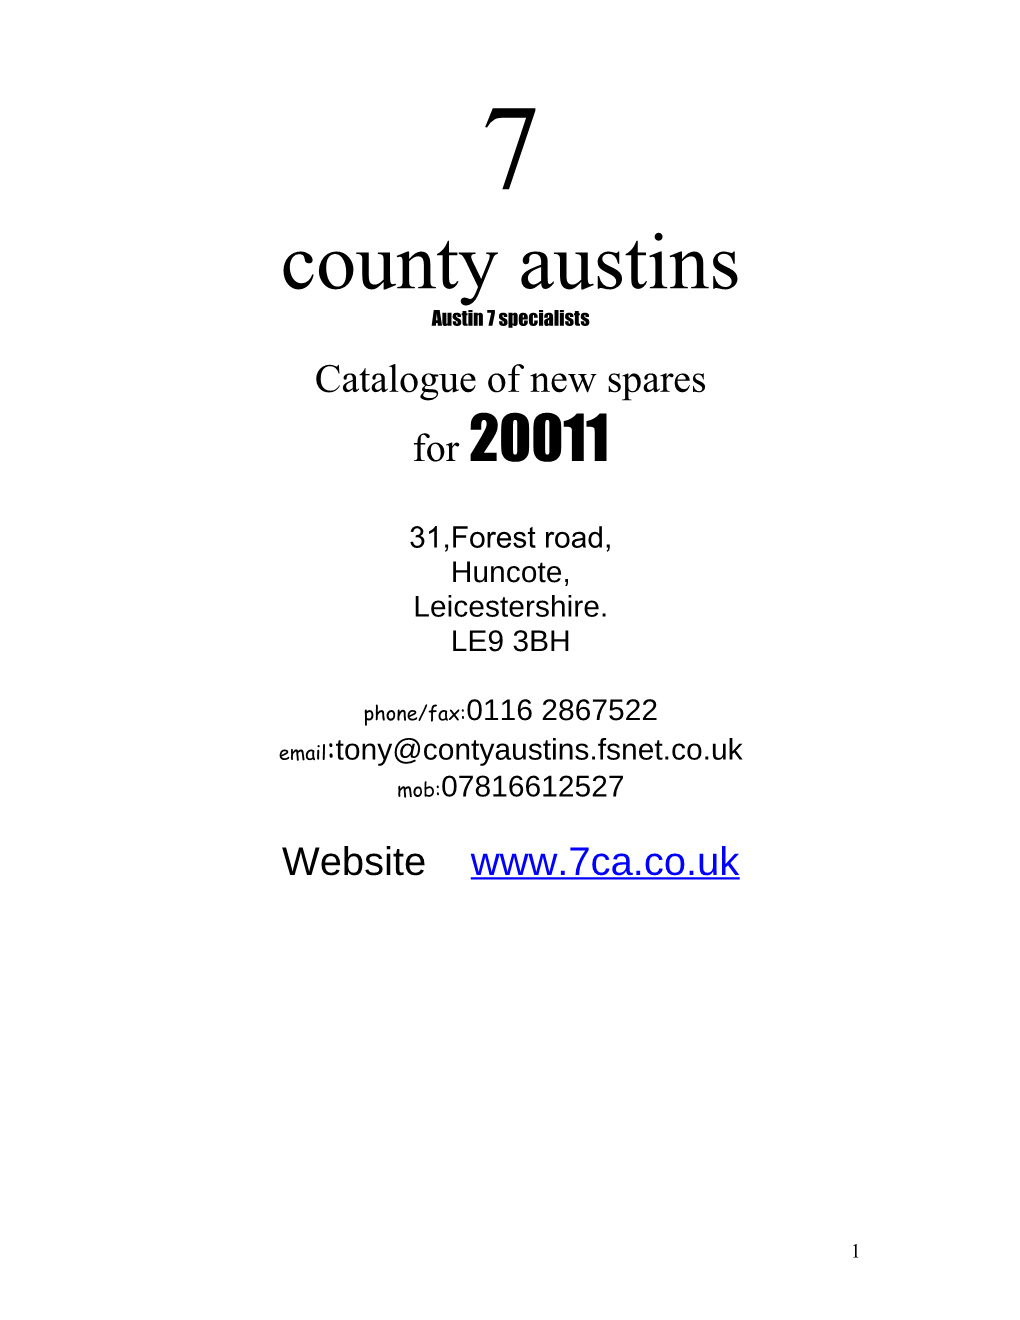 County Austins